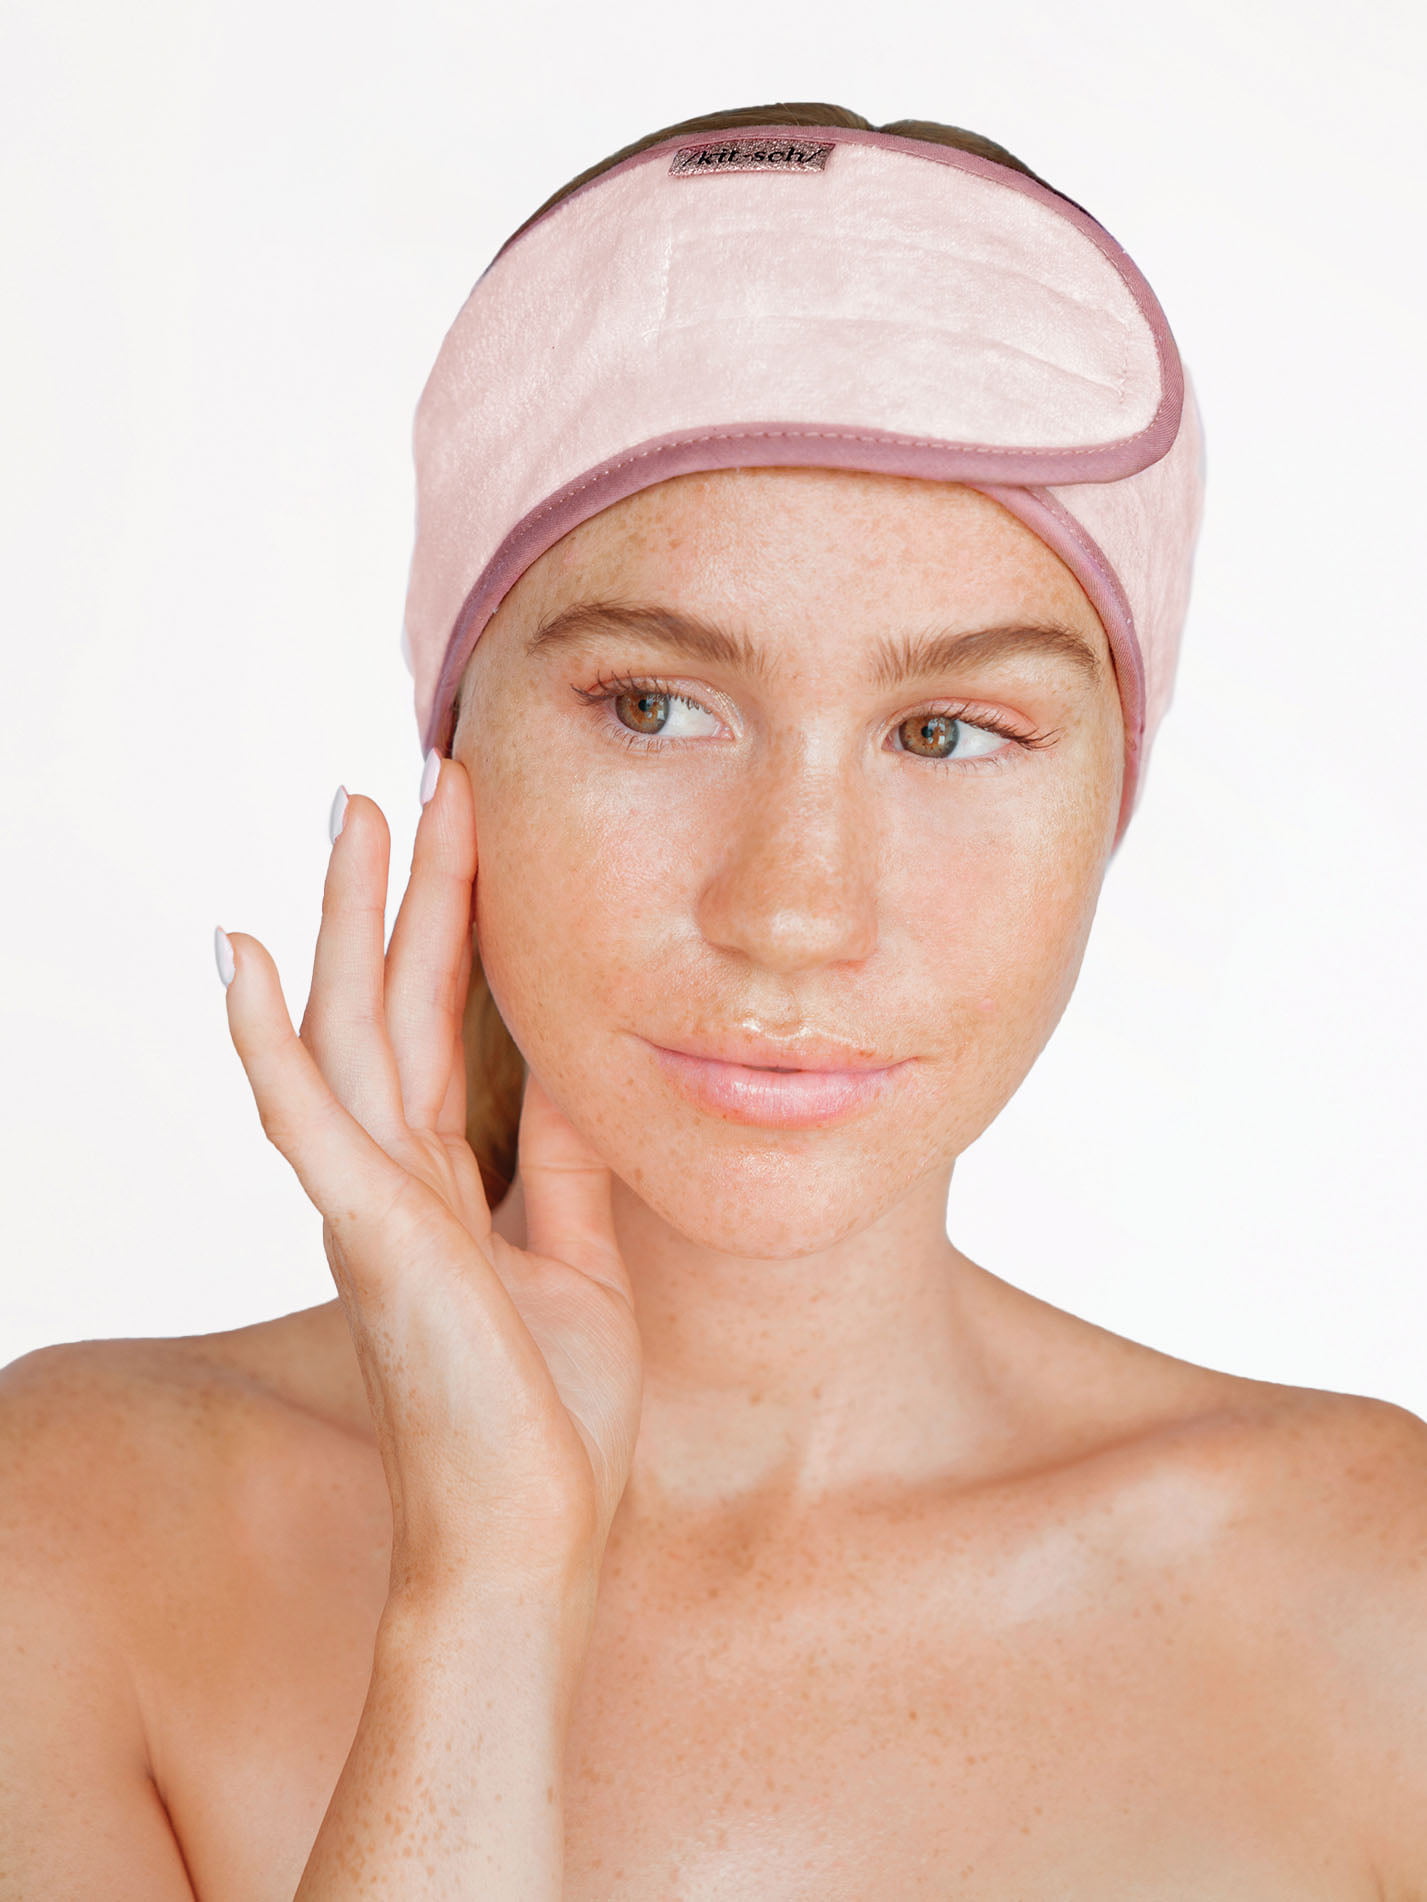 Kitsch Spa Headband - Microfiber Makeup Headband for Washing Face